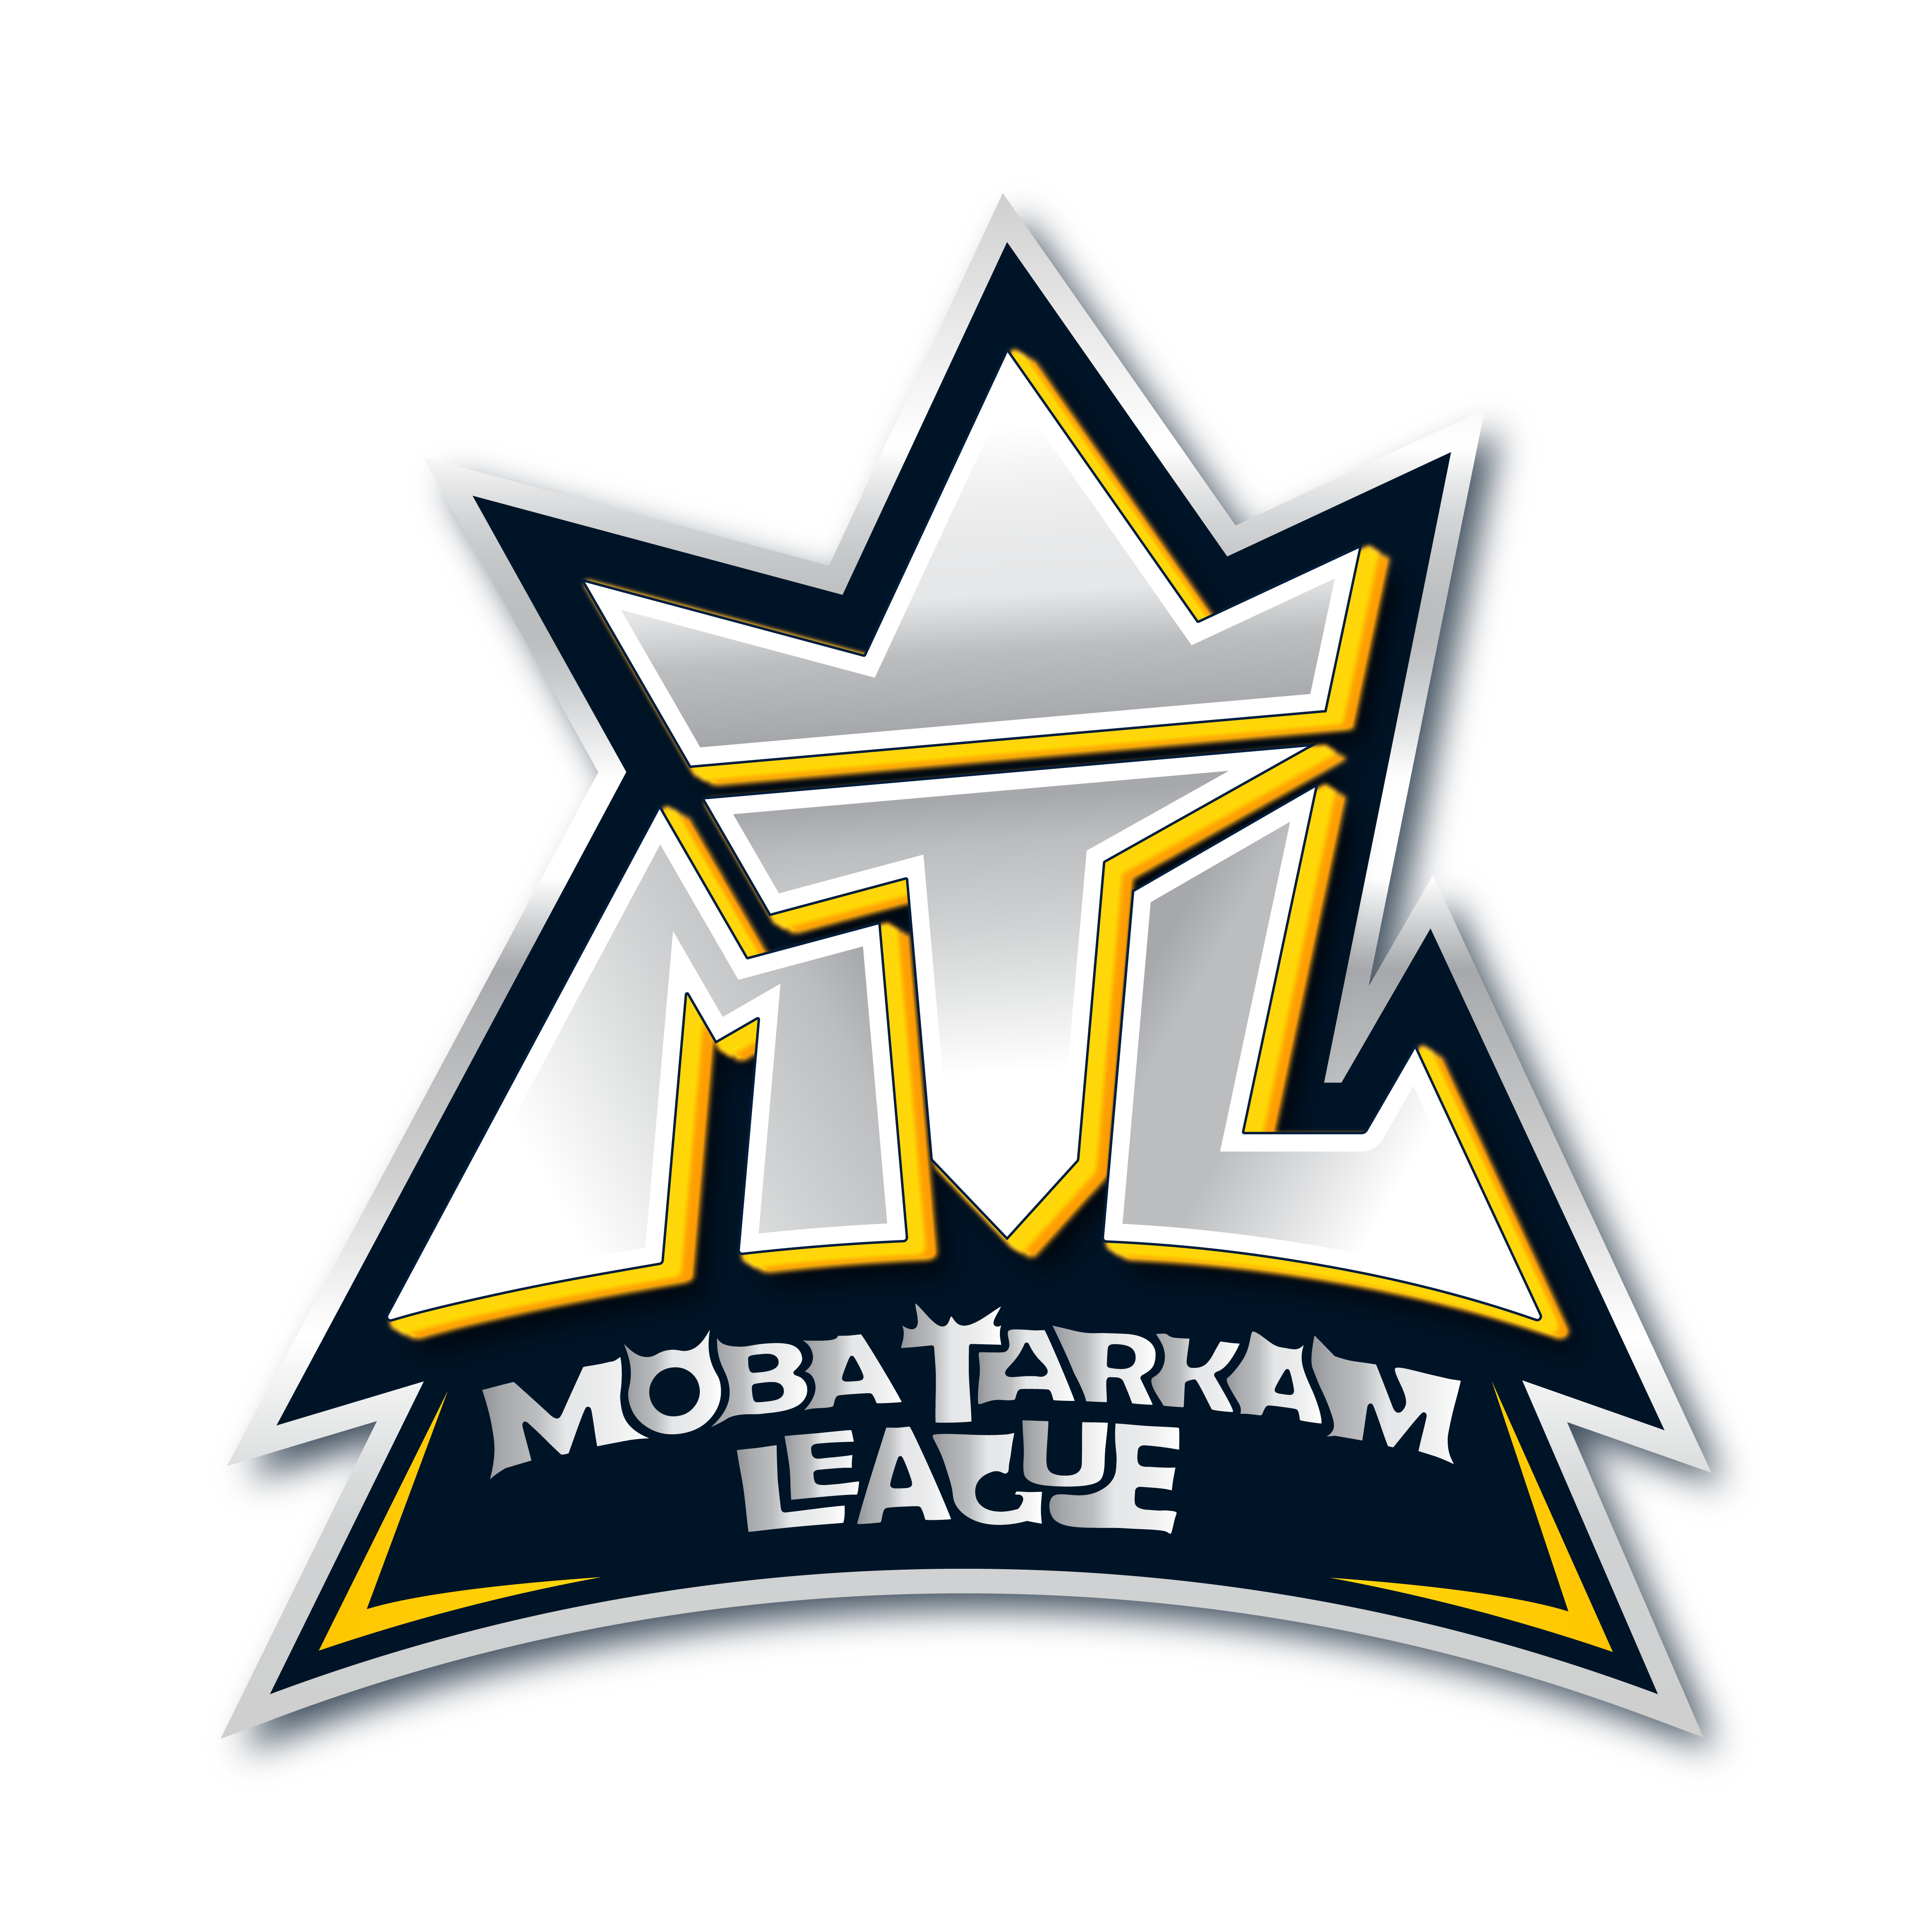 Ikuti Moba Tarkam League (MTL) - Tournament Mobile Legends!